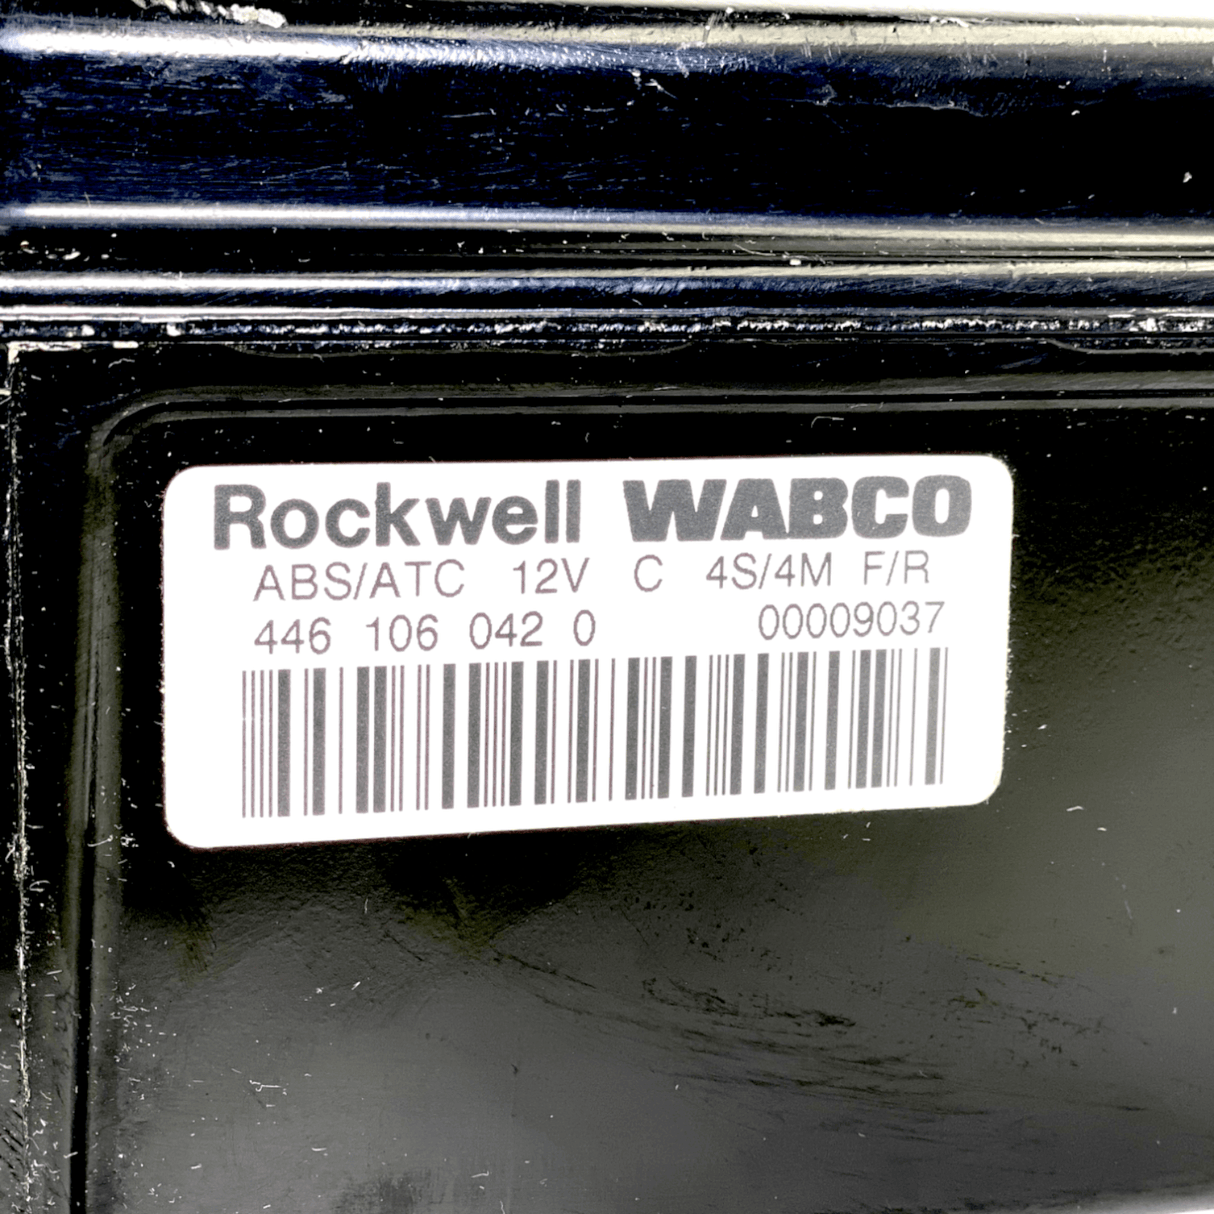 4461060420 446 106 042 0 Genuine Rockwell Wabco® Brake Control Modele.